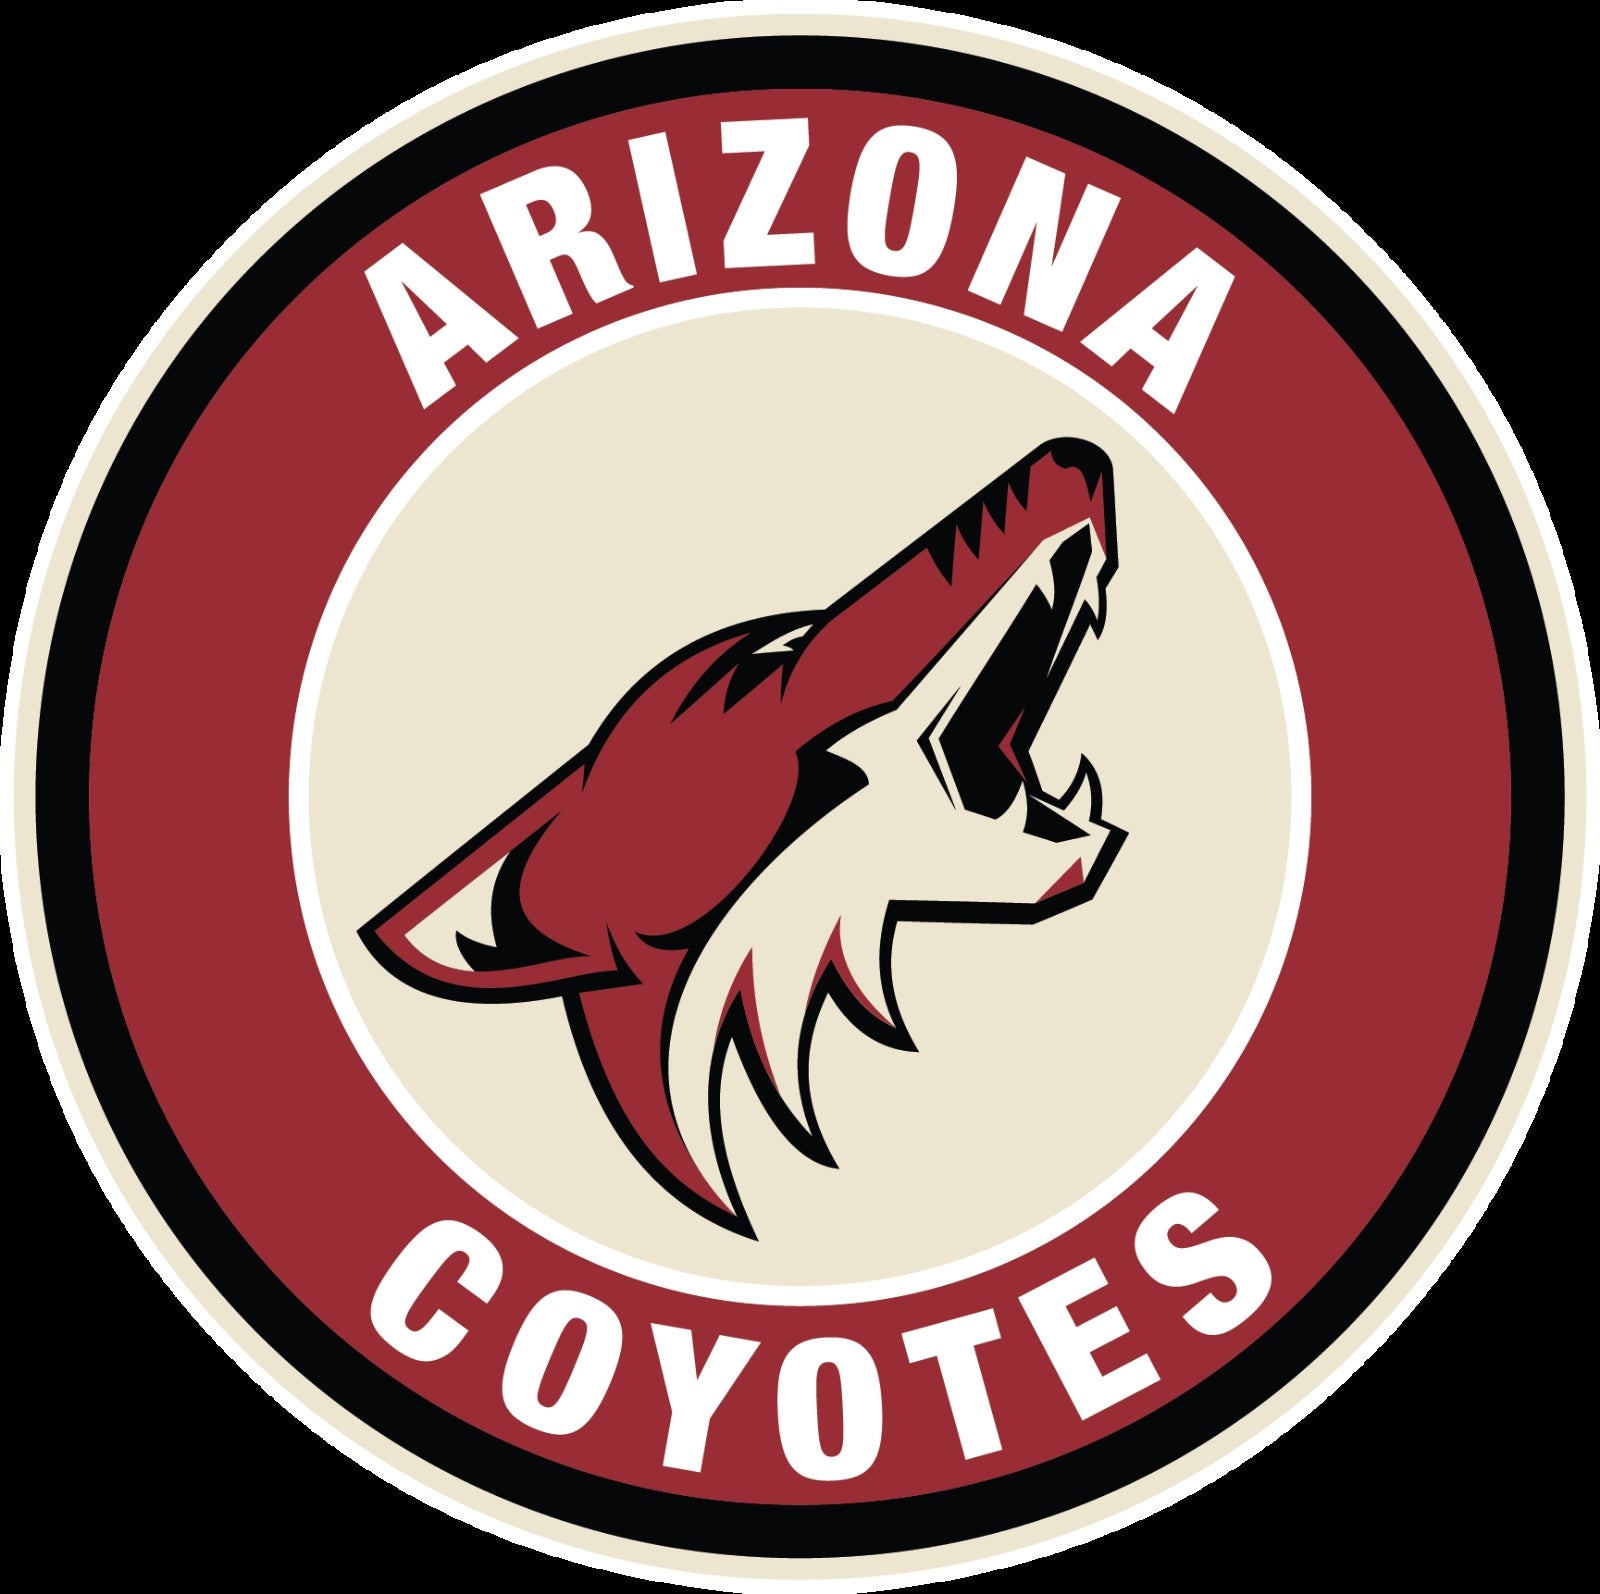 usd coyotes logo